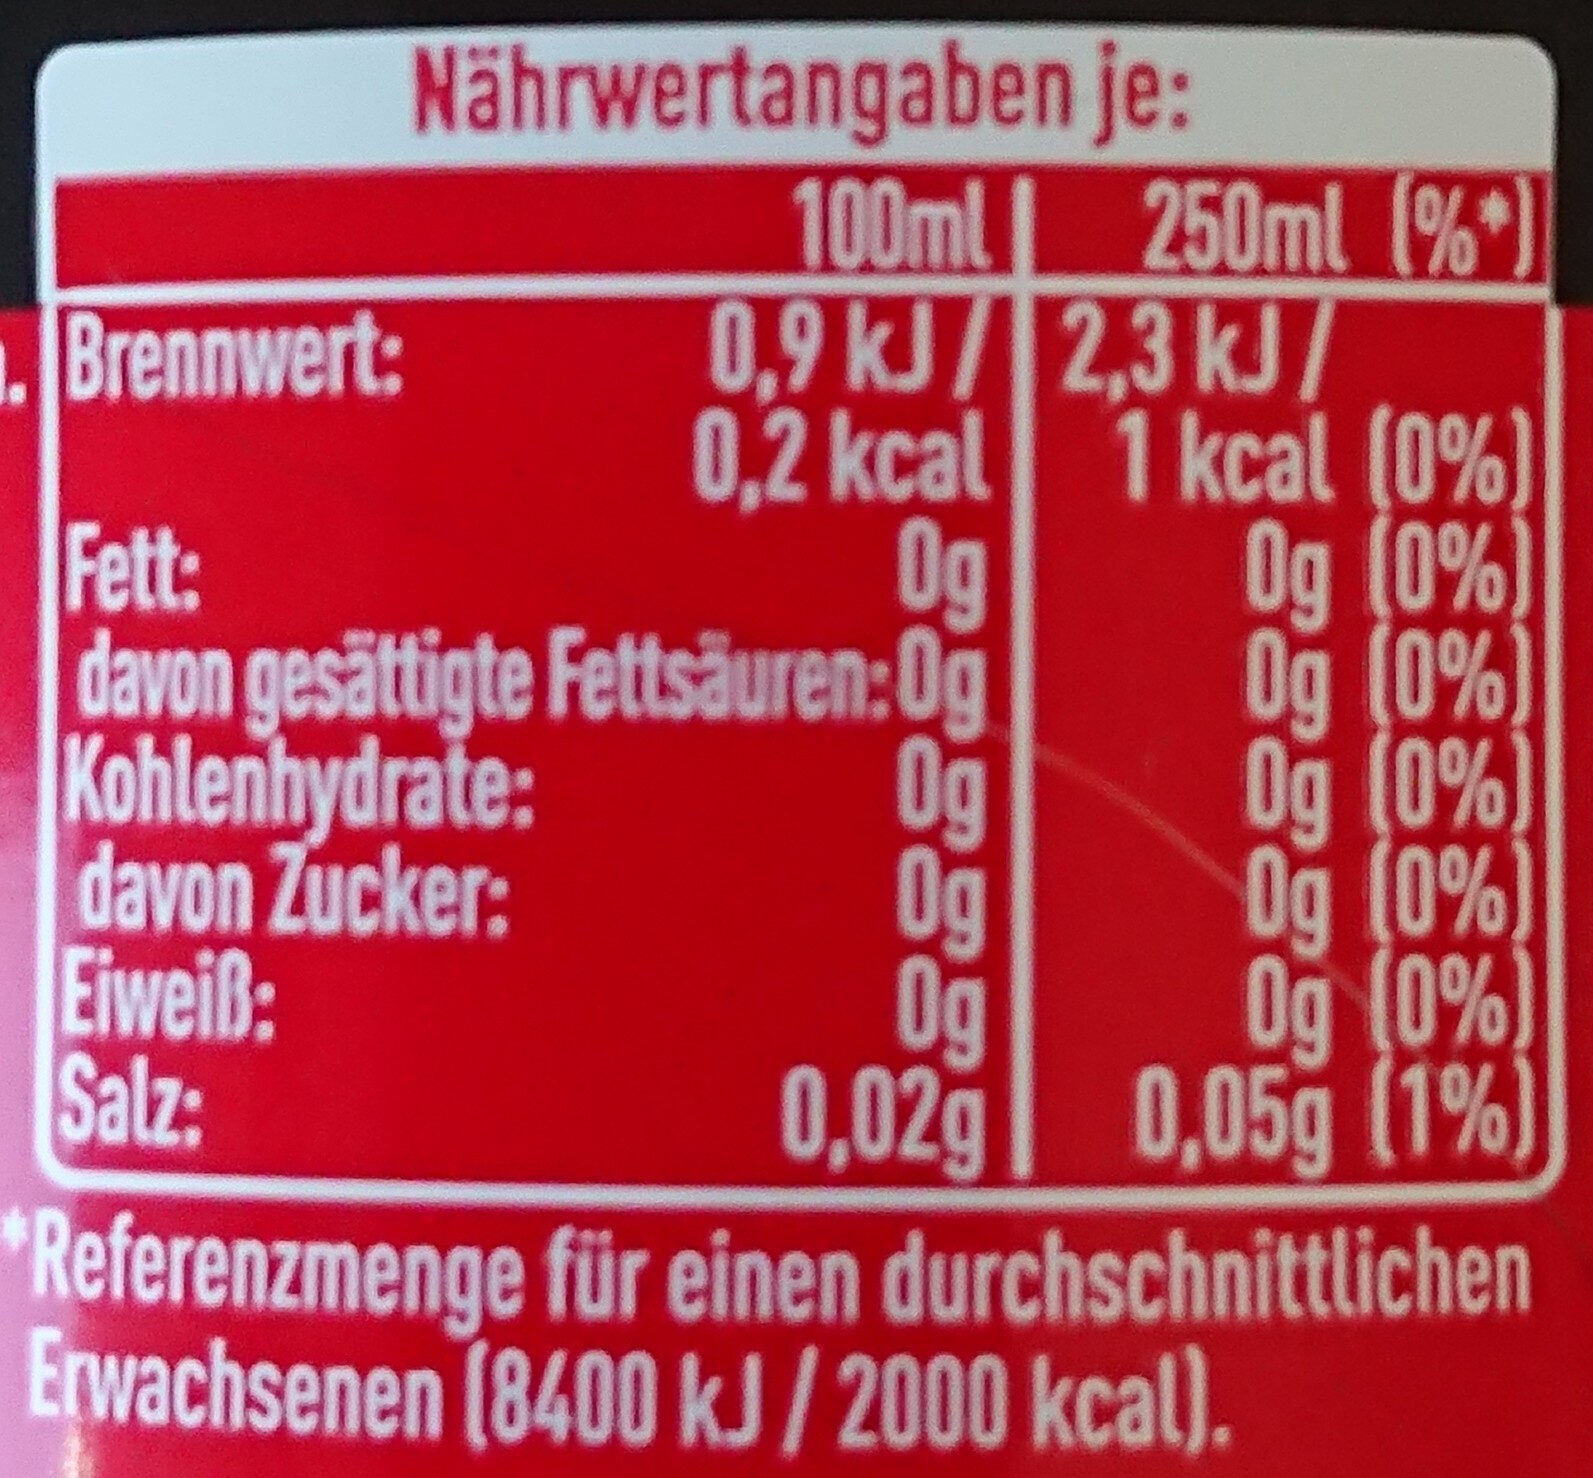 Cola Zero - Nährwertangaben